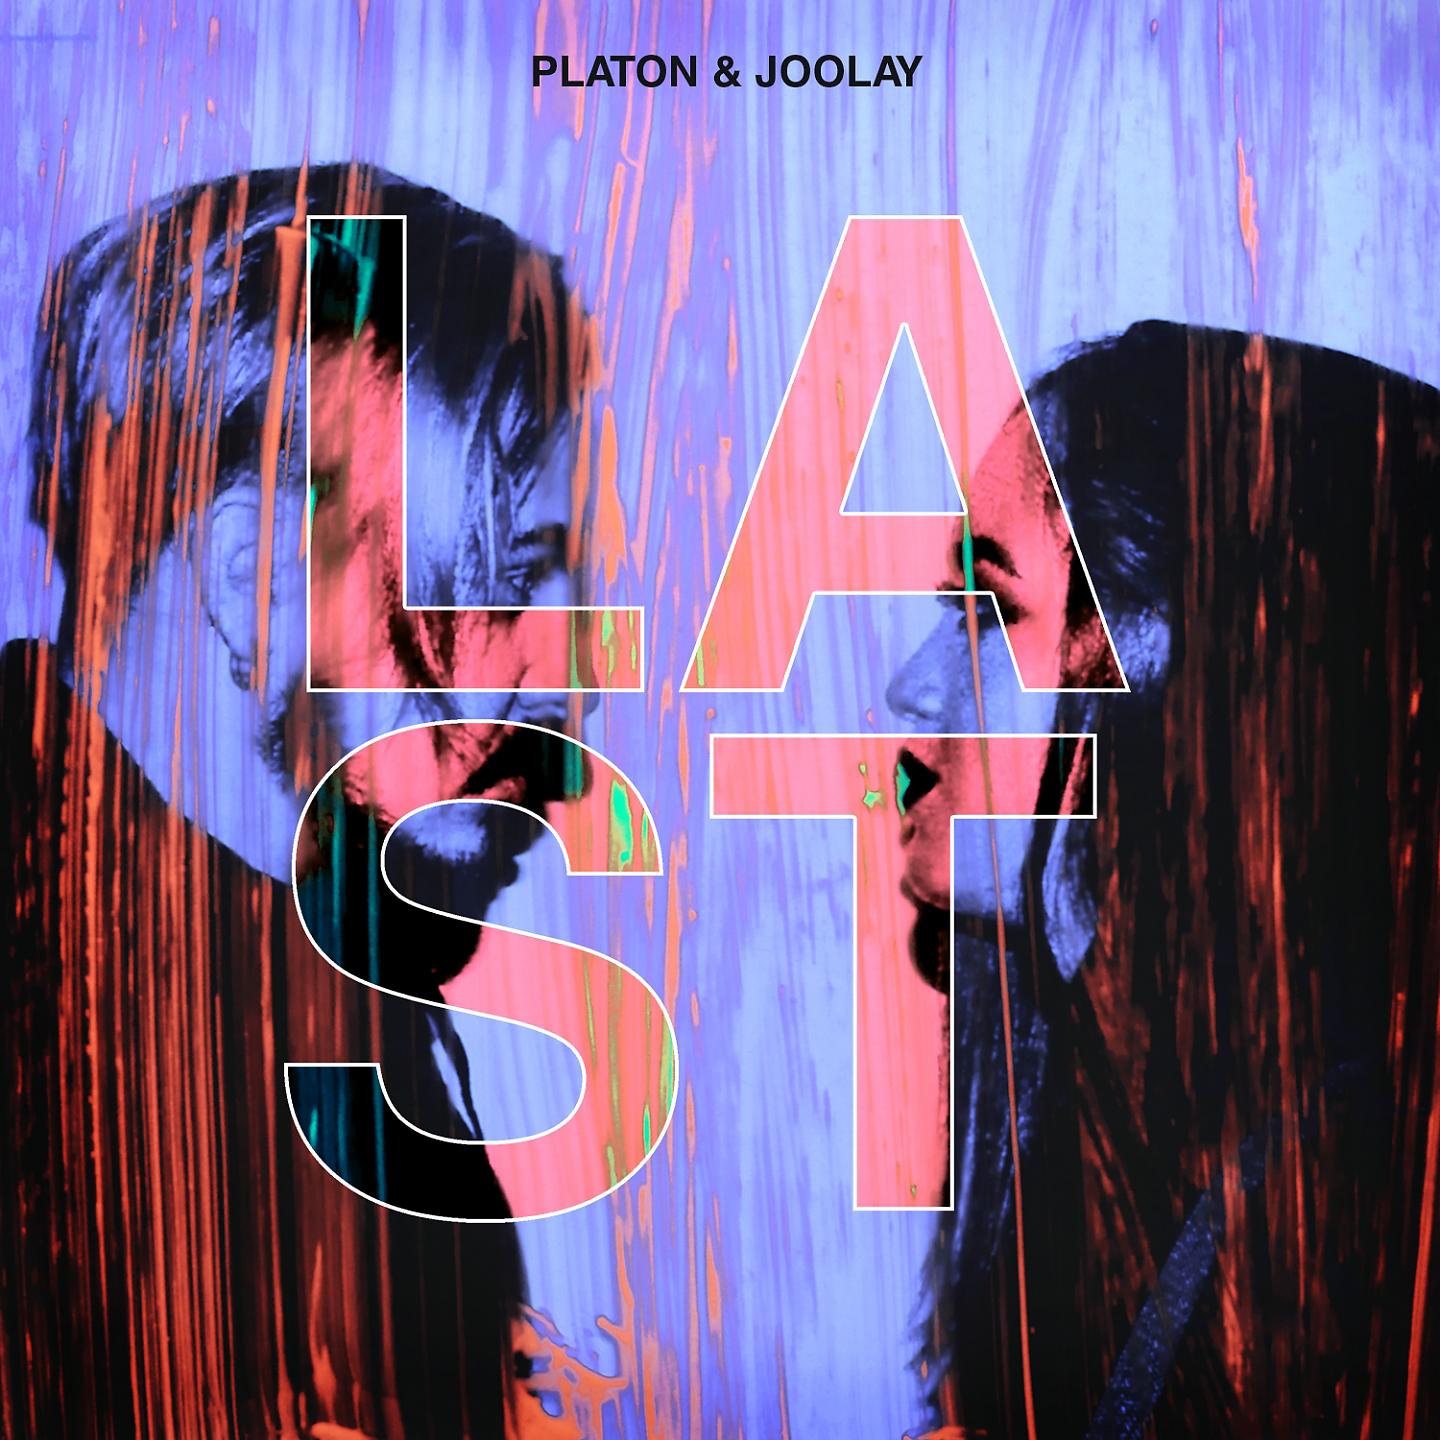 Platon joolay last. Platon feat. Joolay - last. Joolay певица. Platon ft. Joolay - last (VETLOVE & Mike Drozdov Remix) обложка.